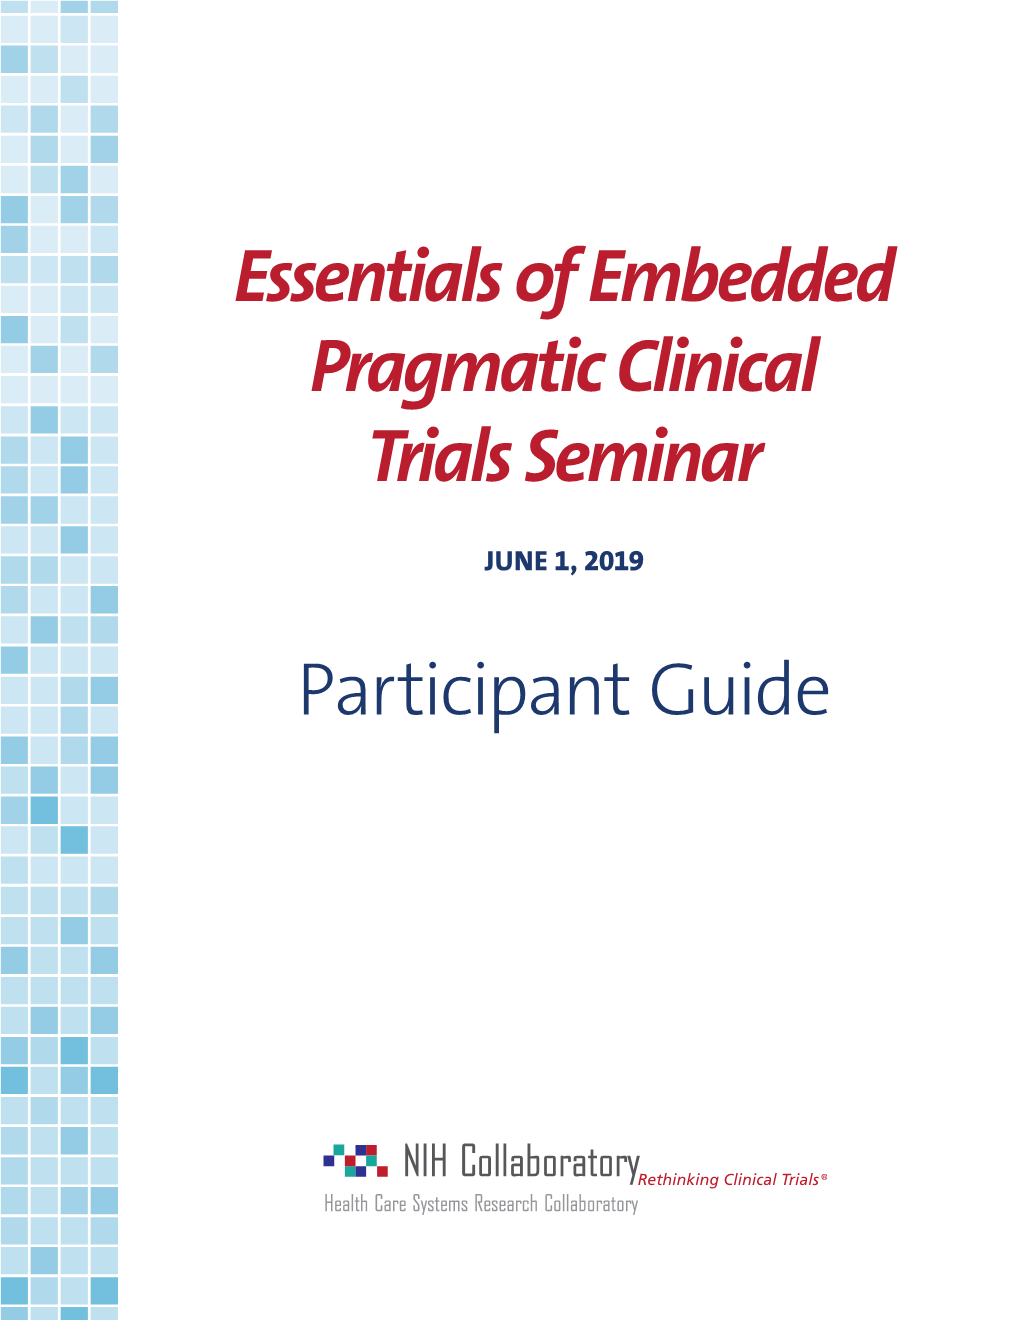 Essentials of Embedded Pragmatic Clinical Trials Seminar Participant Guide